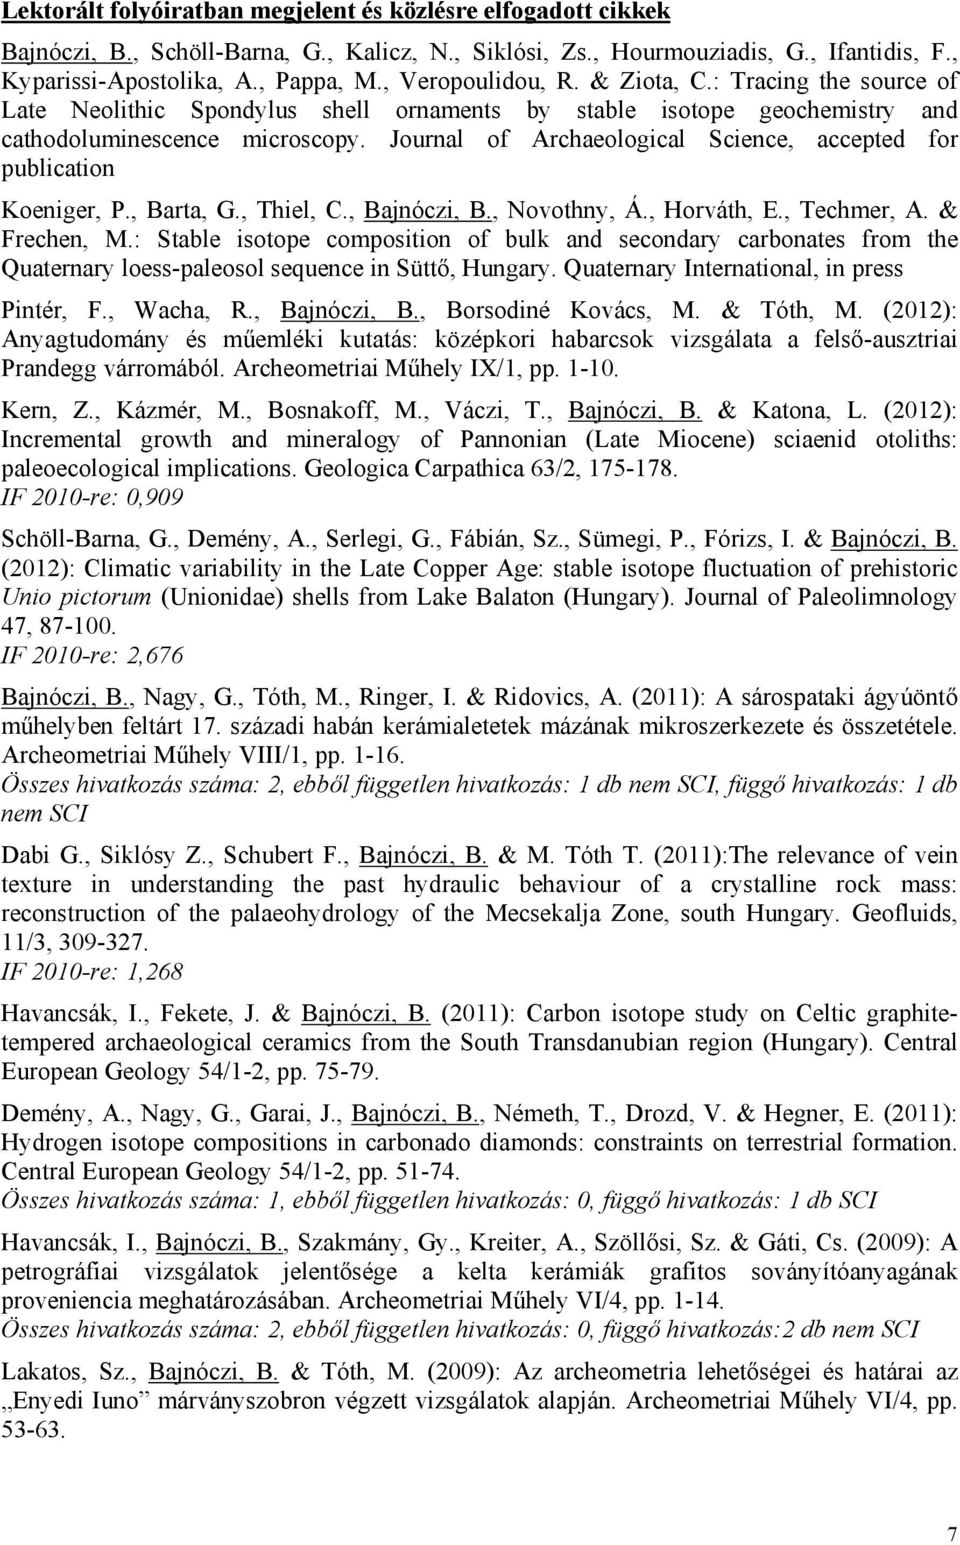 Journal of Archaeological Science, accepted for publication Koeniger, P., Barta, G., Thiel, C., Bajnóczi, B., Novothny, Á., Horváth, E., Techmer, A. & Frechen, M.